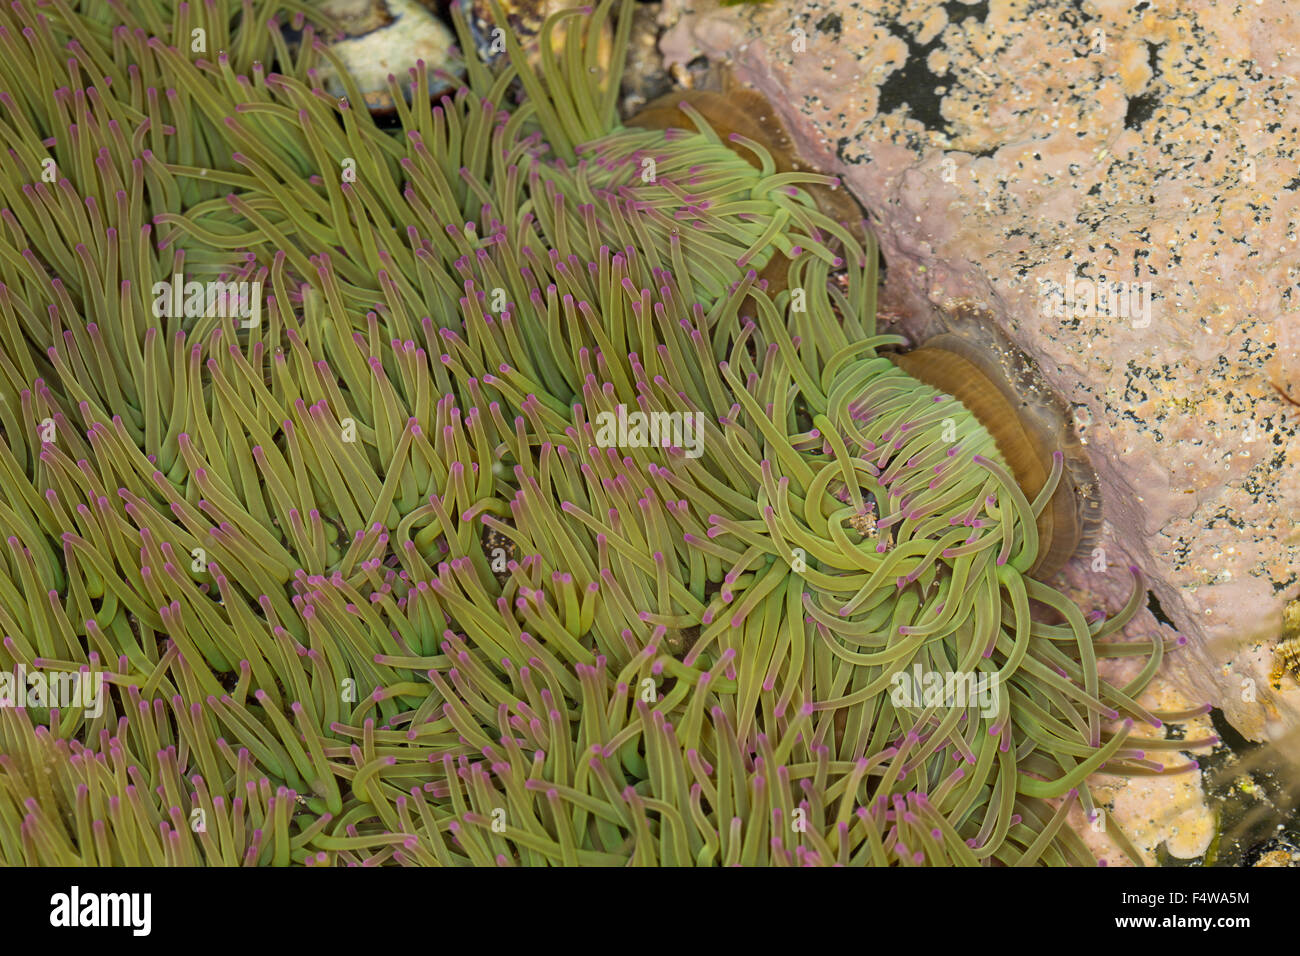 Snakelocks Wachsrose, anémone, Anemonia viridis, Anemonia sulcata, Anémone de mer verte, Actinie verte, les anémones de mer Banque D'Images